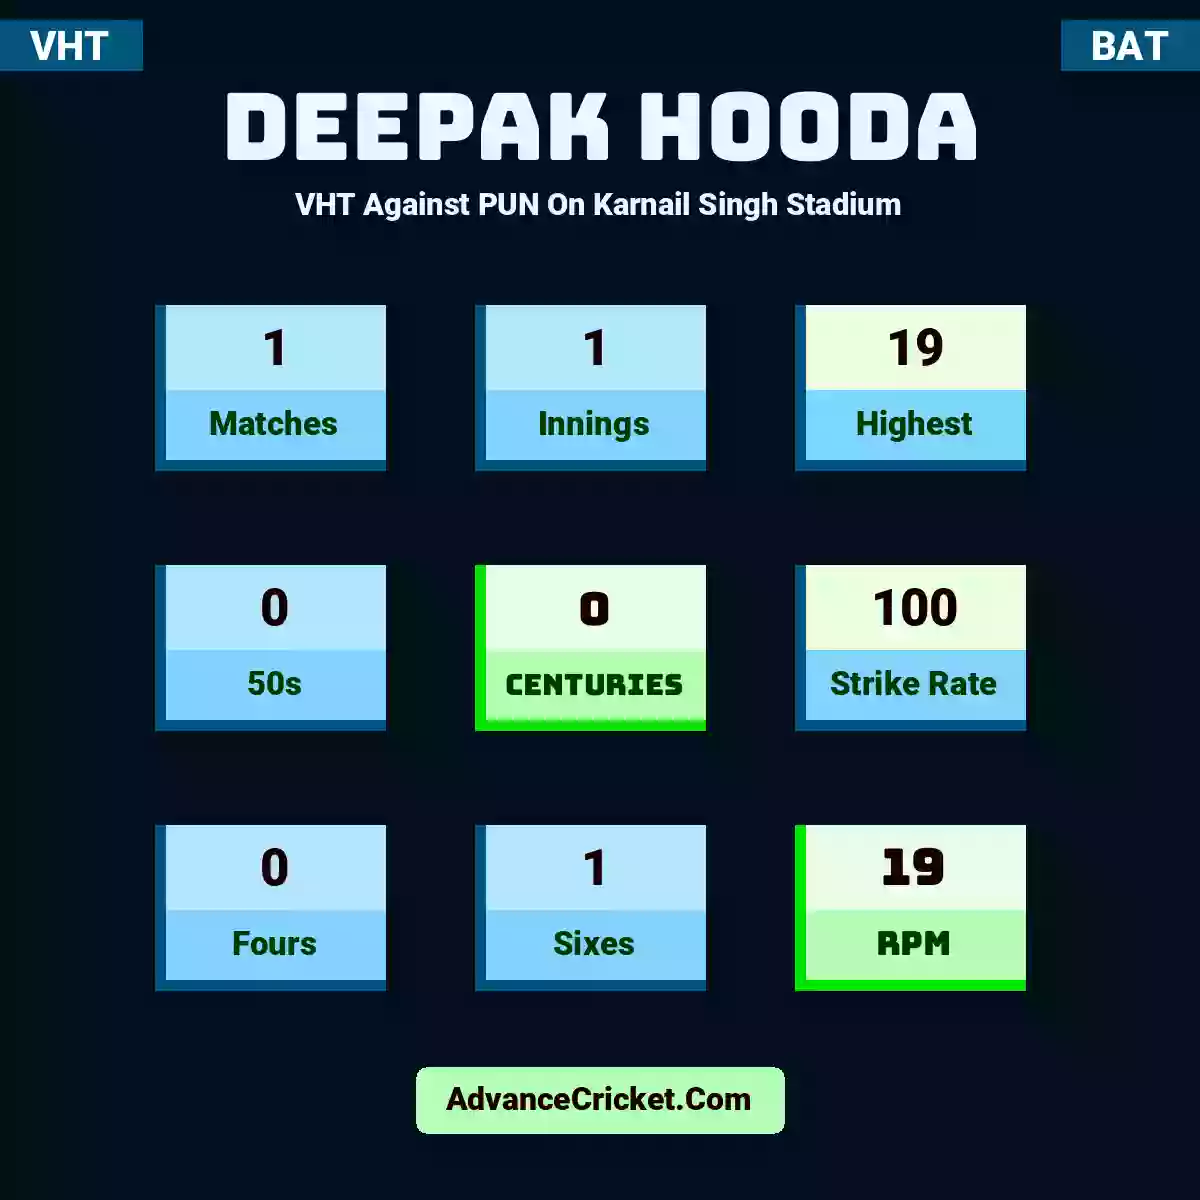 Deepak Hooda VHT  Against PUN On Karnail Singh Stadium, Deepak Hooda played 1 matches, scored 19 runs as highest, 0 half-centuries, and 0 centuries, with a strike rate of 100. D.Hooda hit 0 fours and 1 sixes, with an RPM of 19.